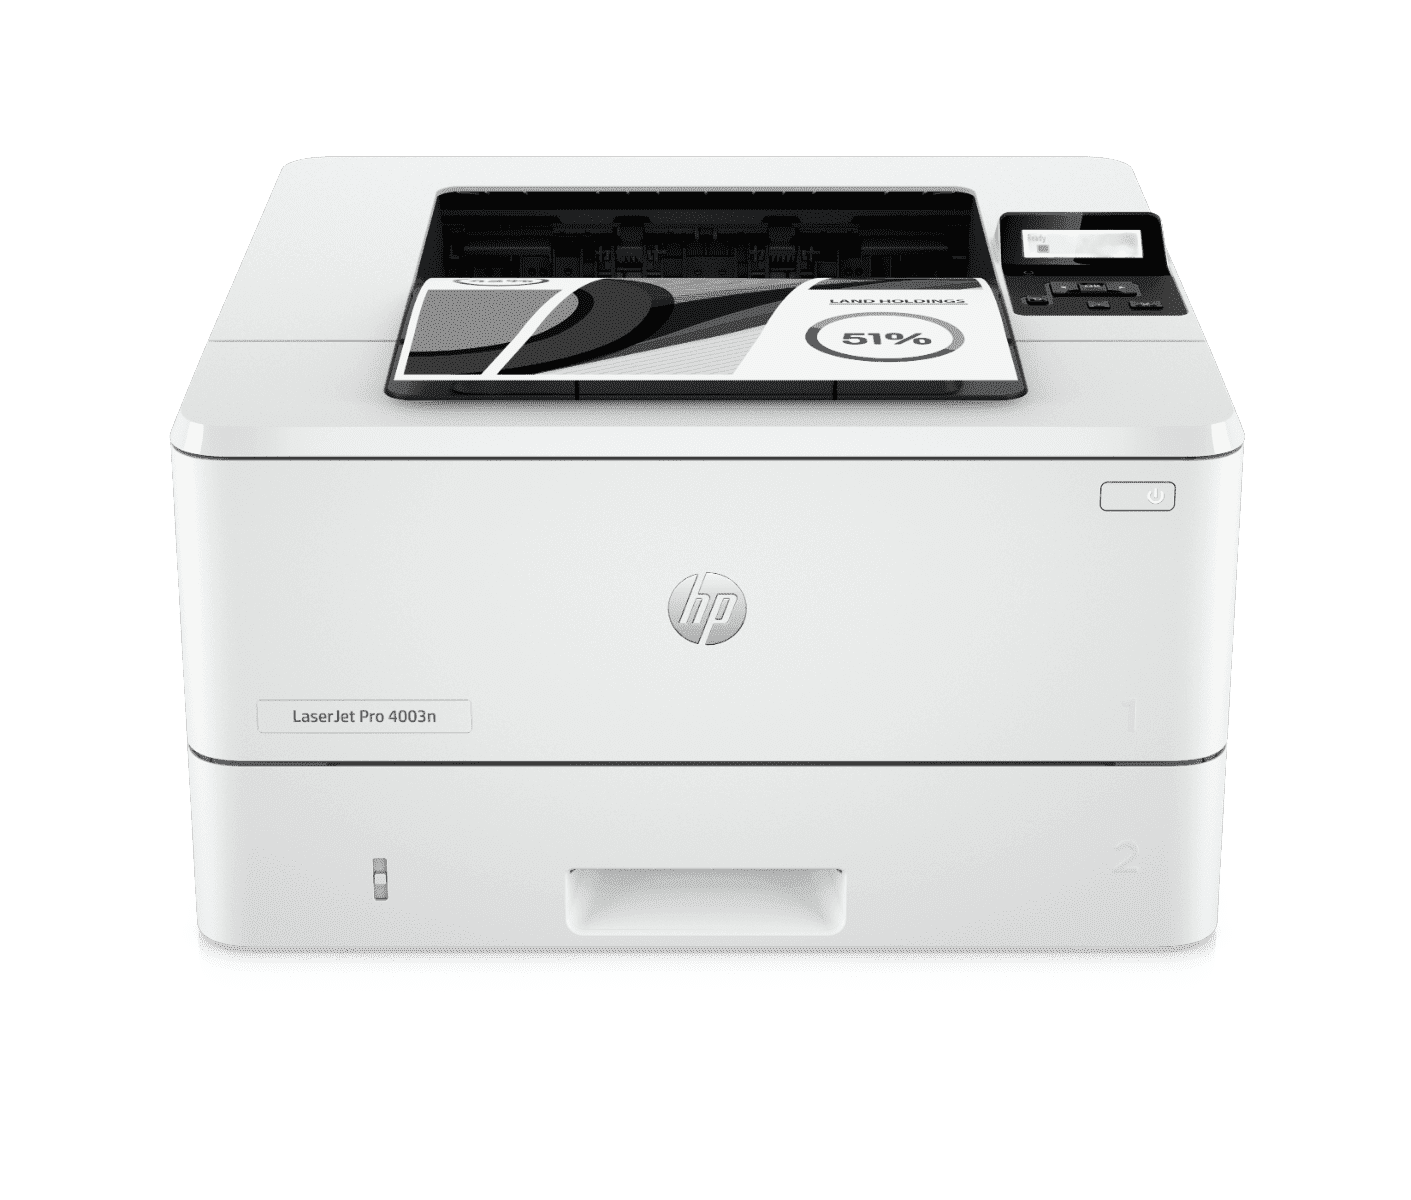 Impresora HP LaserJet Pro 4003n, Blanco y Negro, Láser, Print